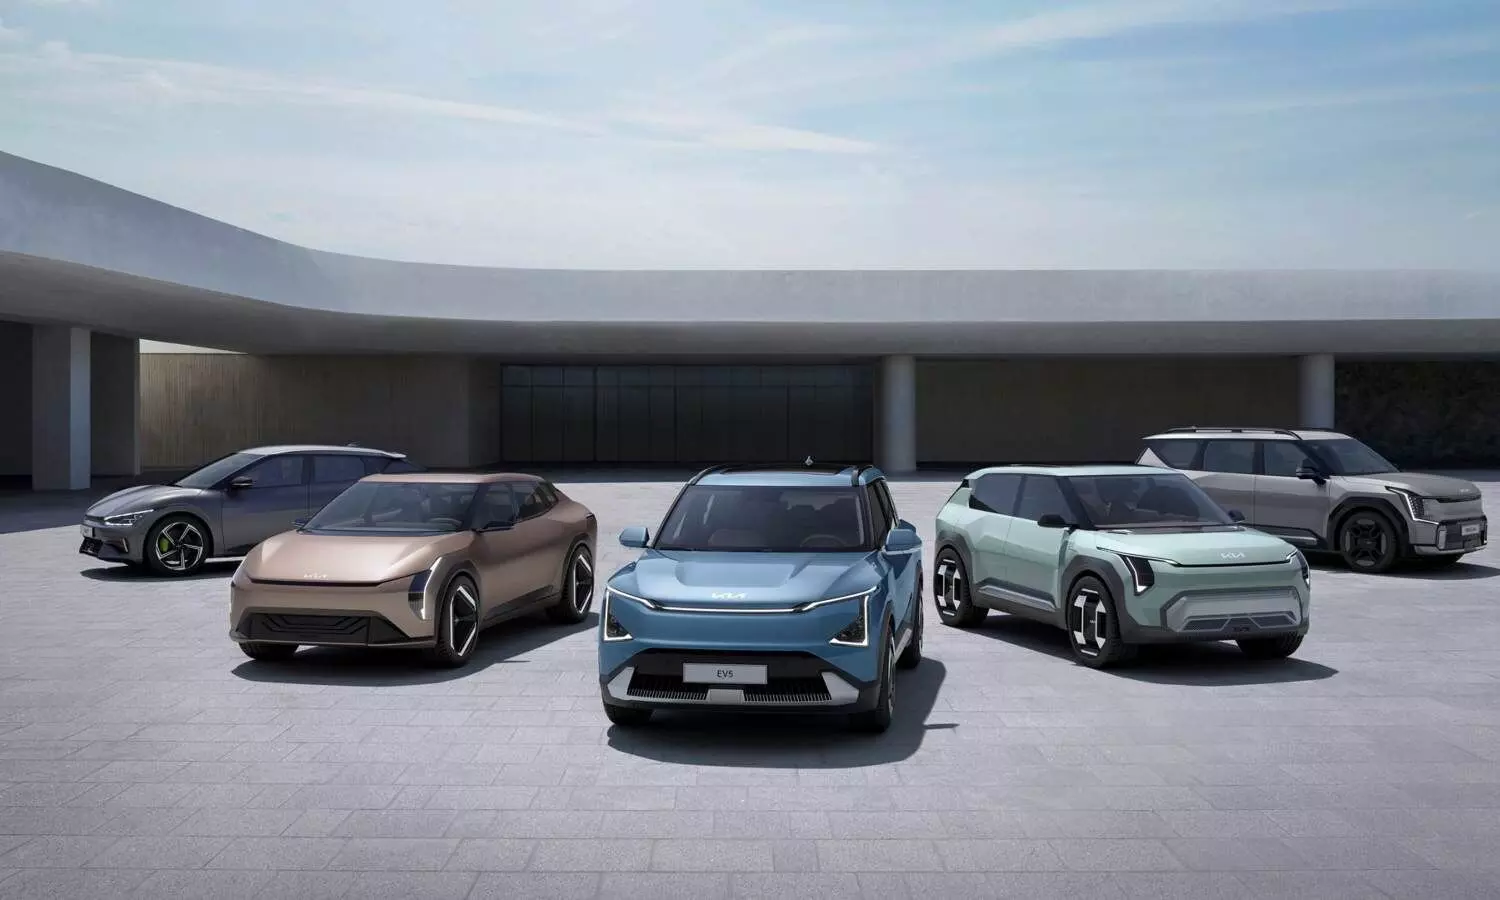 Kia Motors unveiled three new electric models